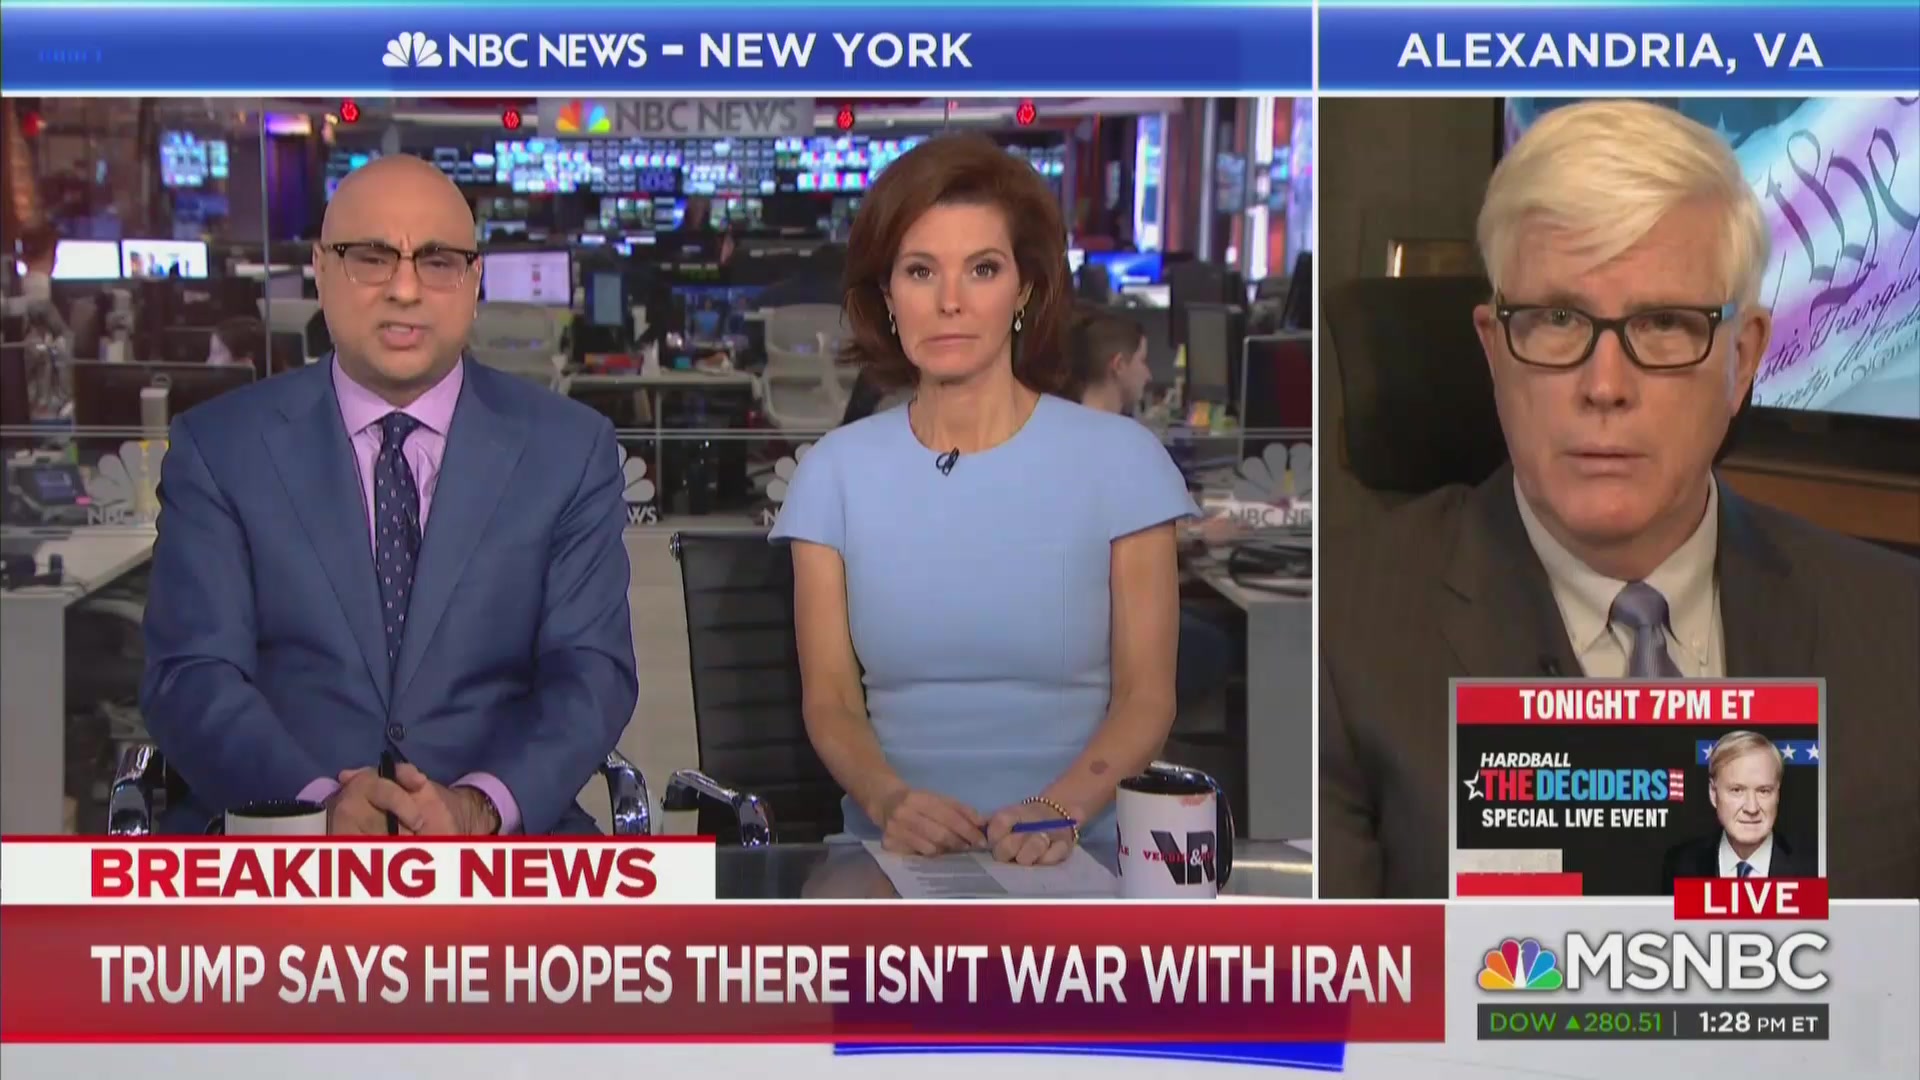 MSNBC’s Ali Velshi Blows Up at Hugh Hewitt Over Iran: ‘Just Stop for Heaven’s Sake!’